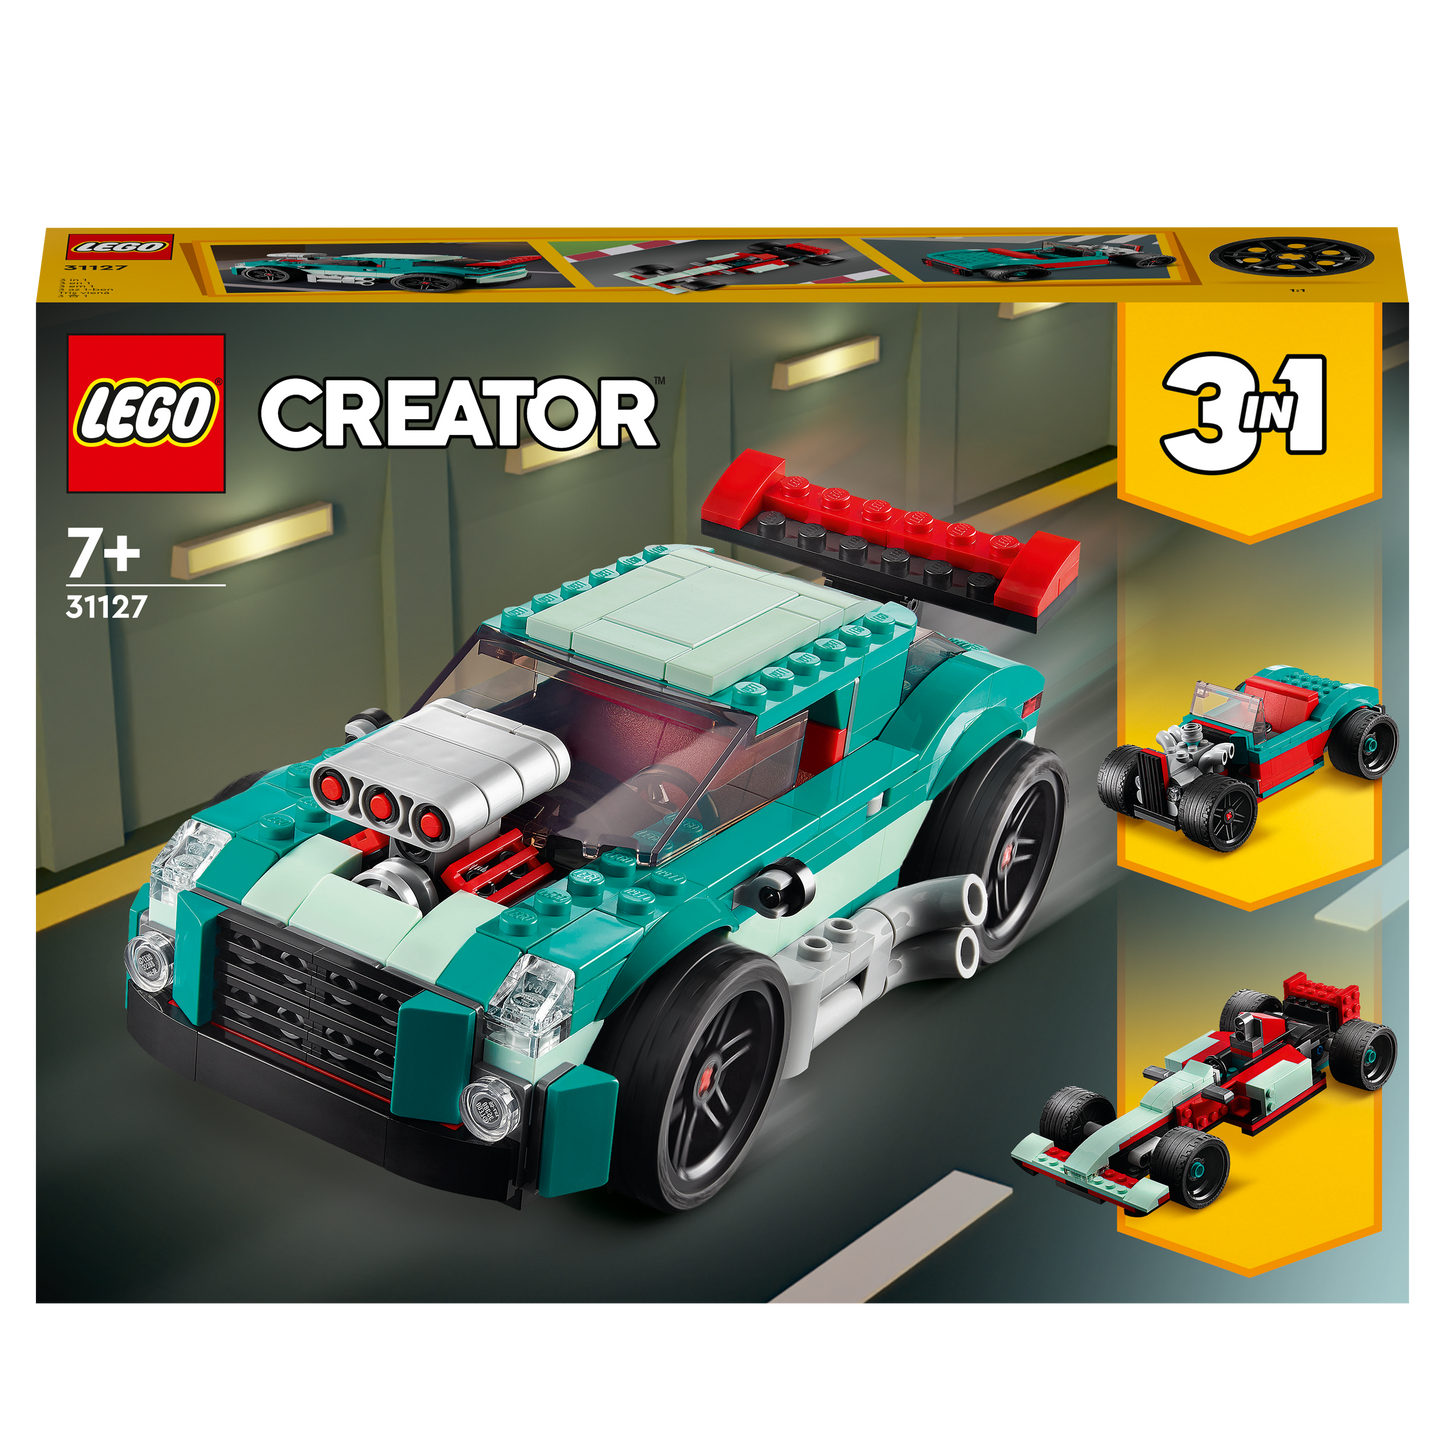 31127 LEGO Creator - Street Racer